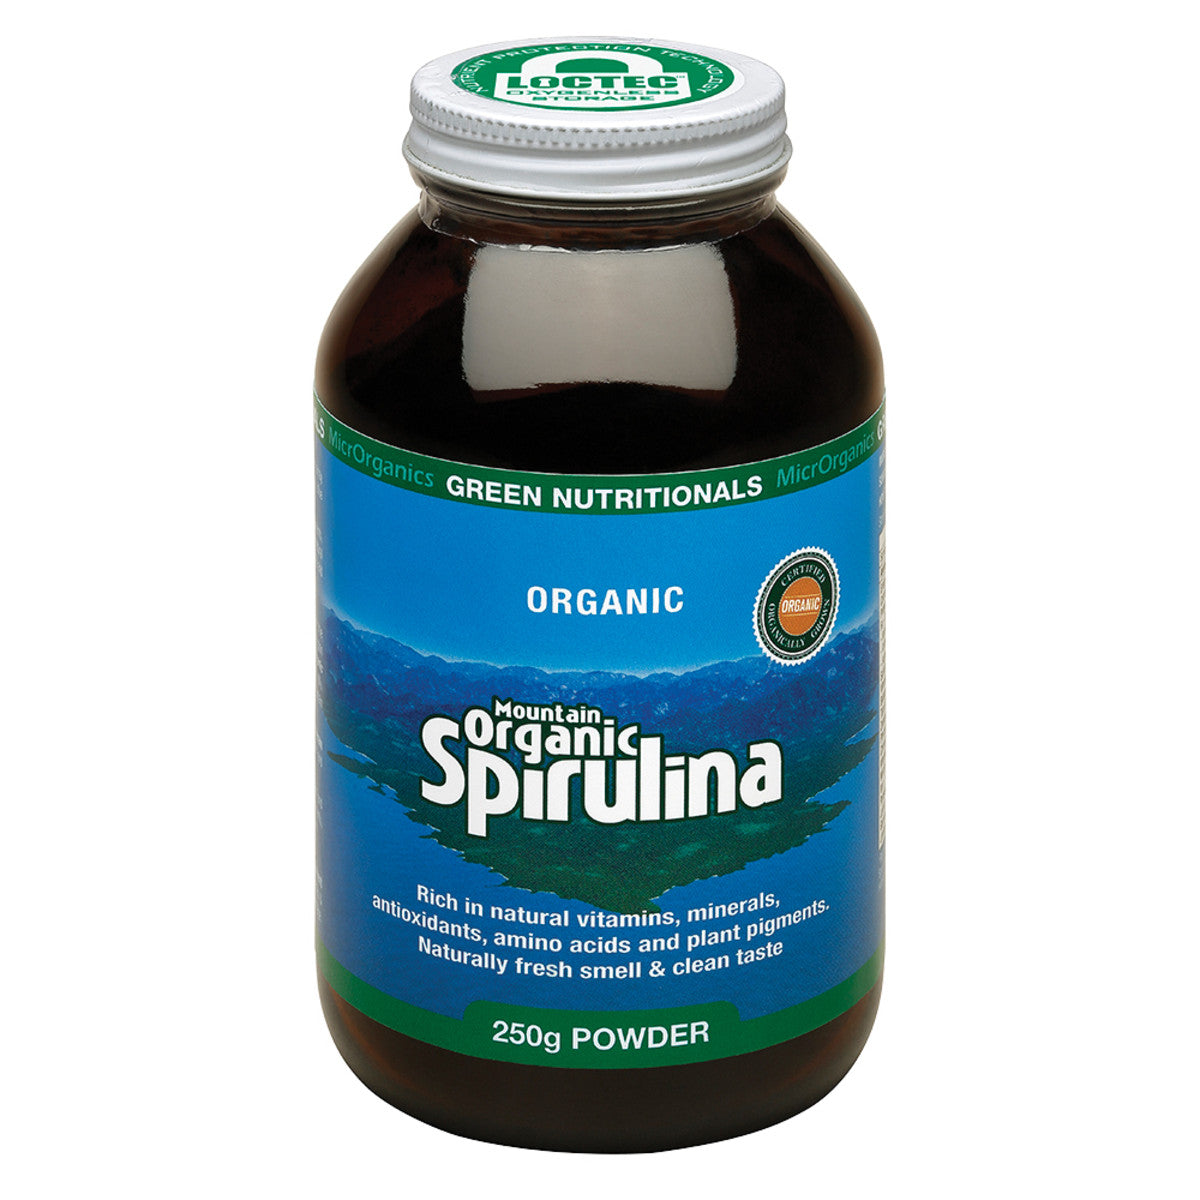 Green Nutritionals - Mountain Organic Spirulina Powder